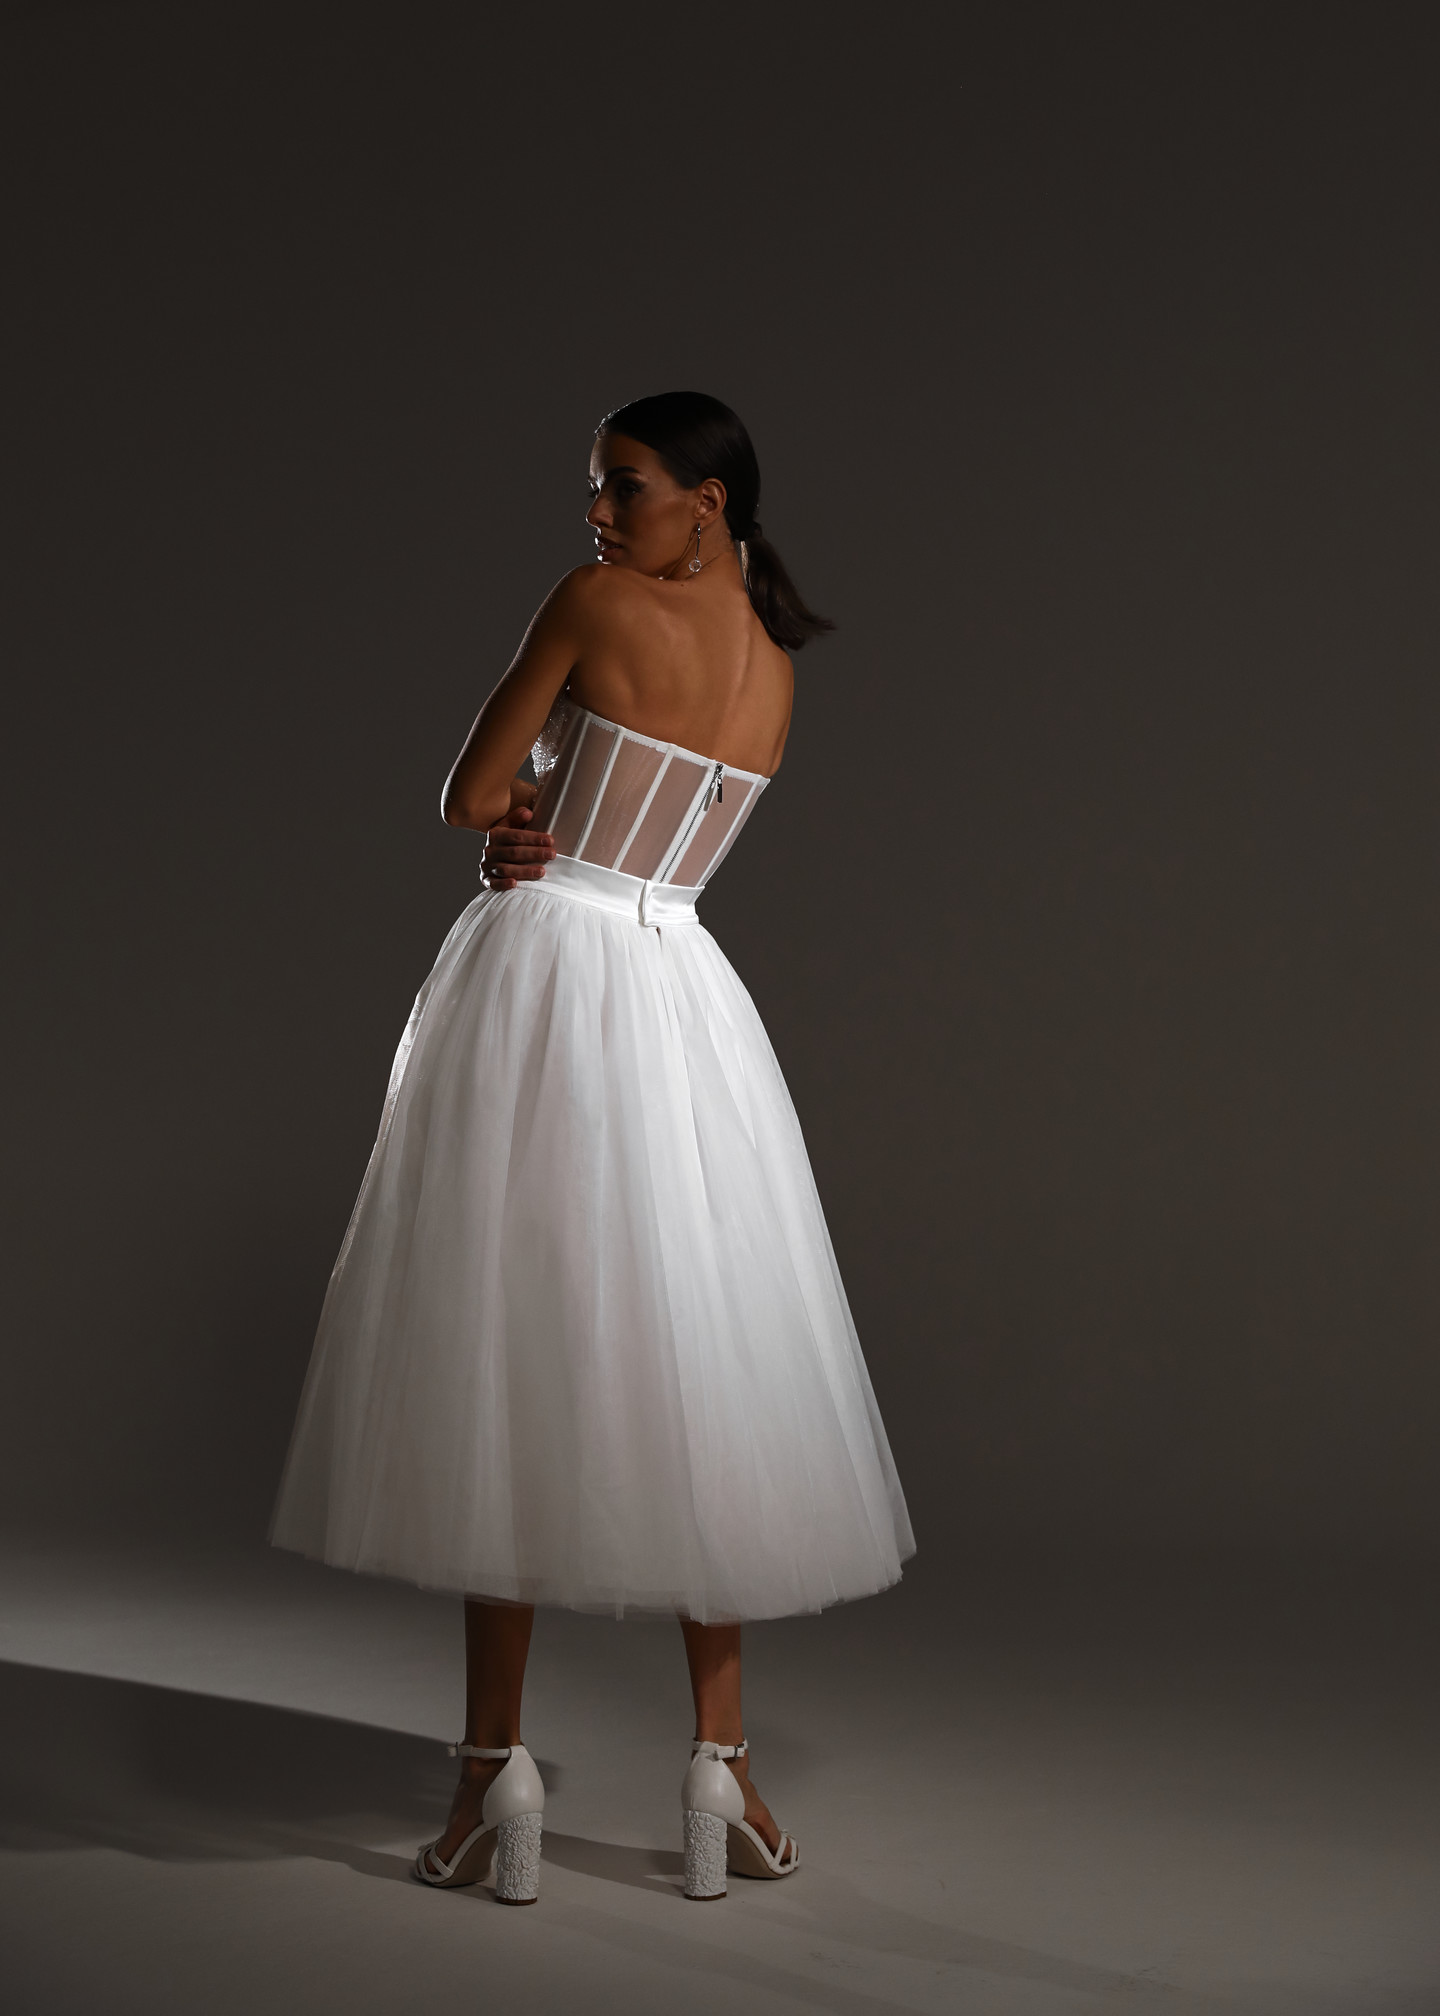 Tulle skirt, 2021, couture, skirt, bridal, off-white, tulle, bridal corset and skirt #1, bridal corset and skirt #5, bridal corset and skirt #2, evening corset and skirt #1, evening corset and skirt #2